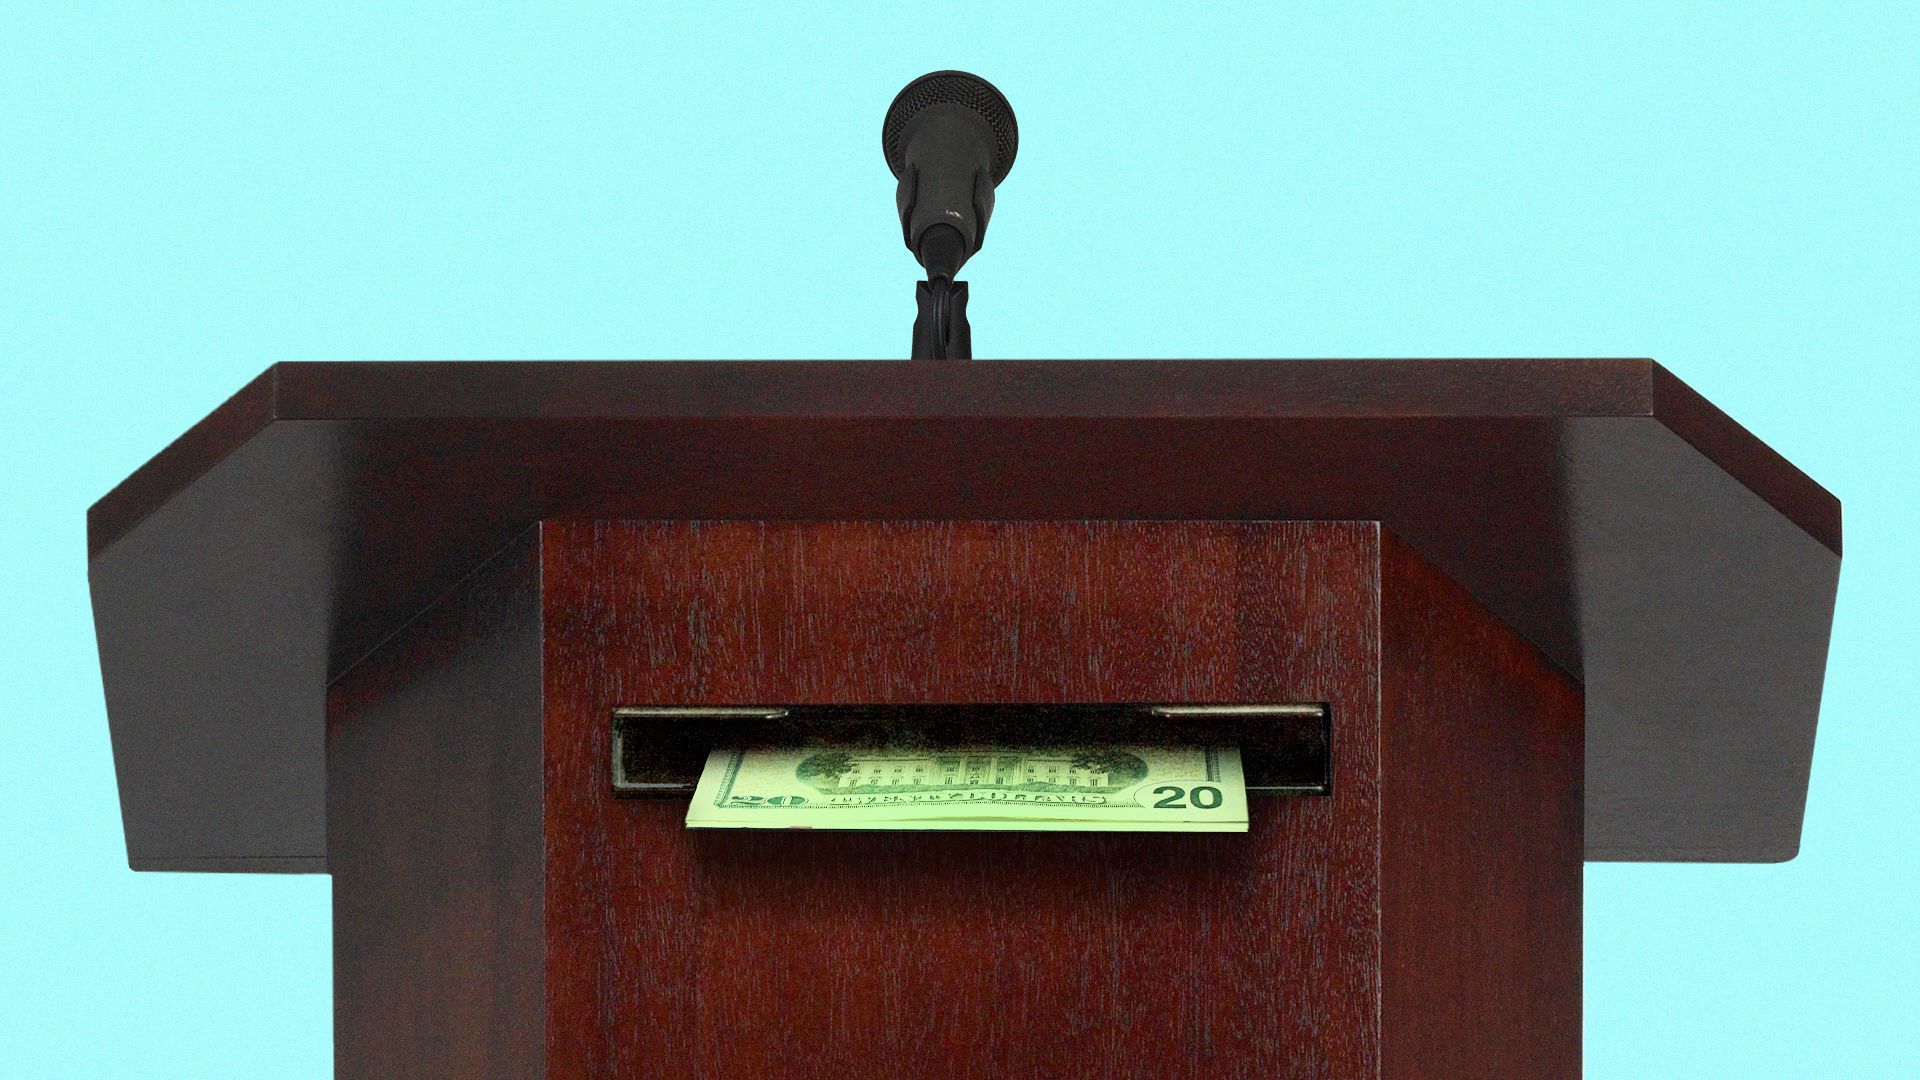 Illustration of a podium with a slot extruding twenty dollar bills